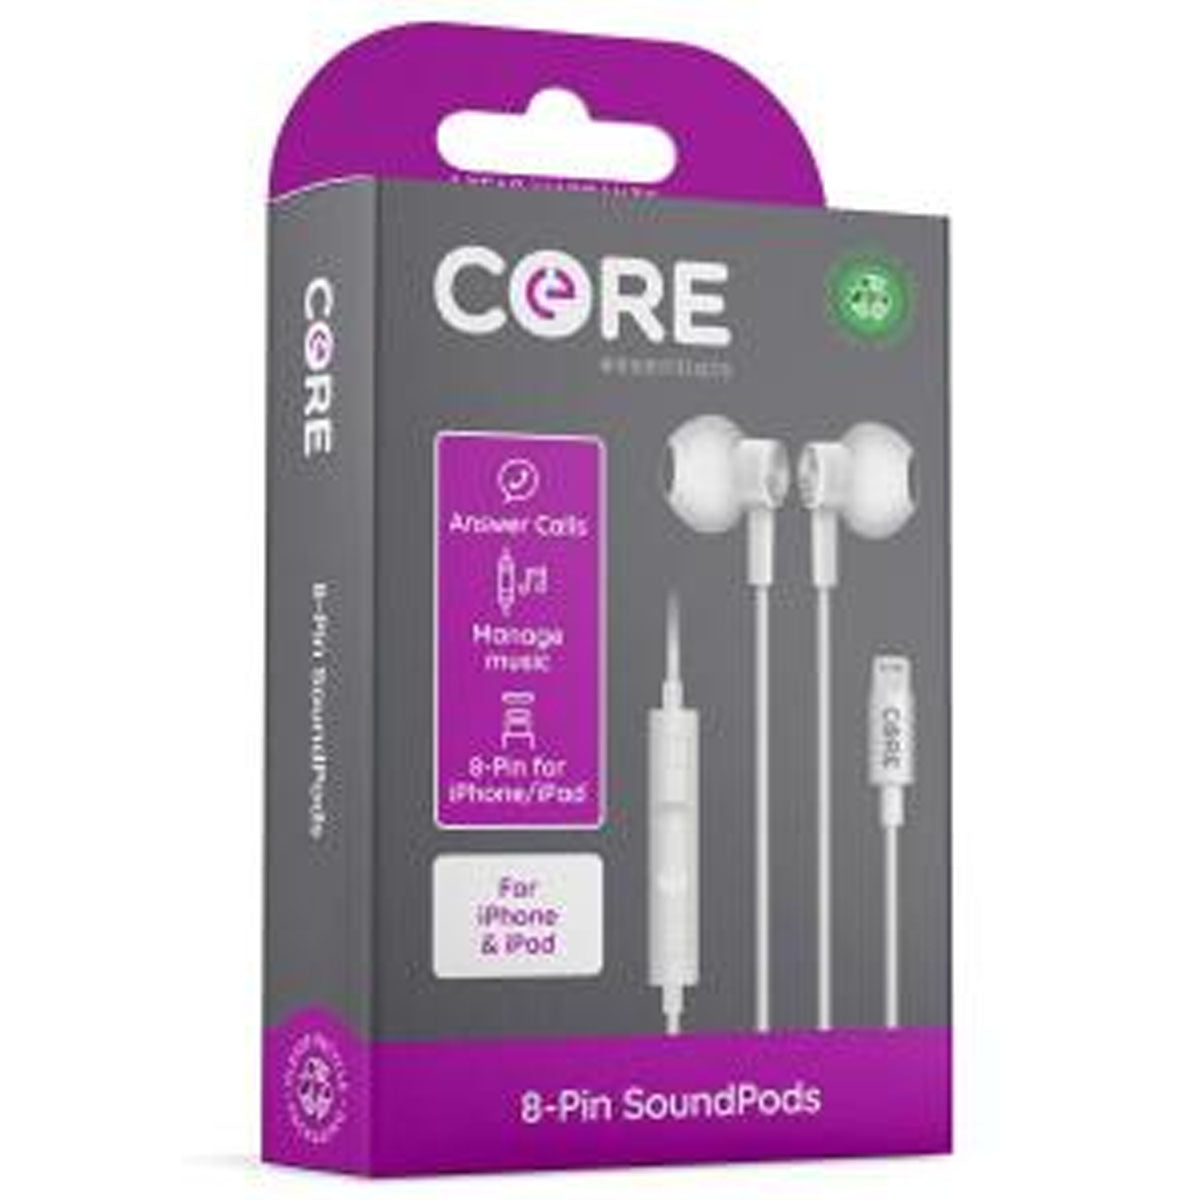 Core - Phone Headphones earphones in the packaging.